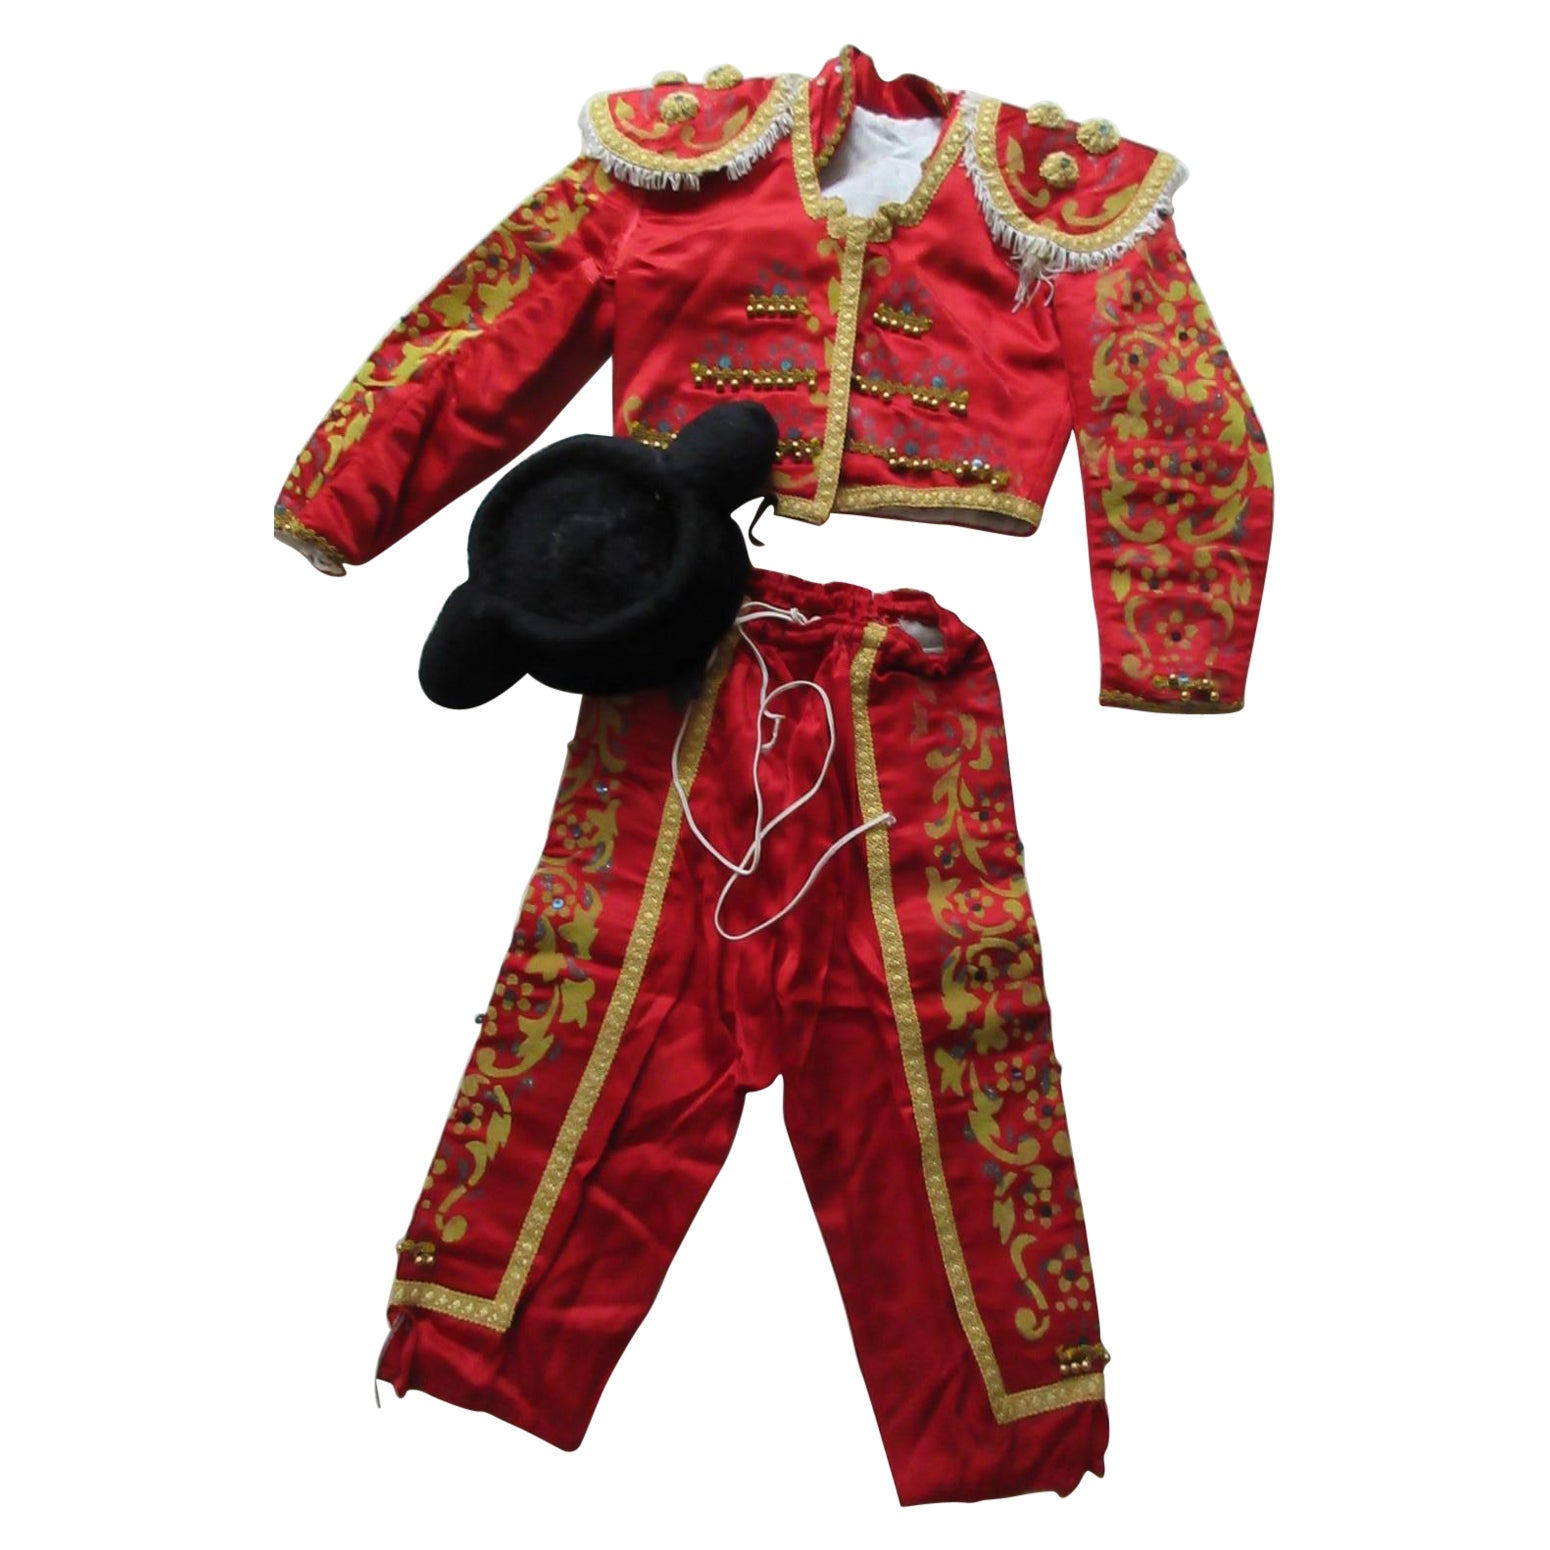 Antique Costume d'enfants Matador espagnol en vente